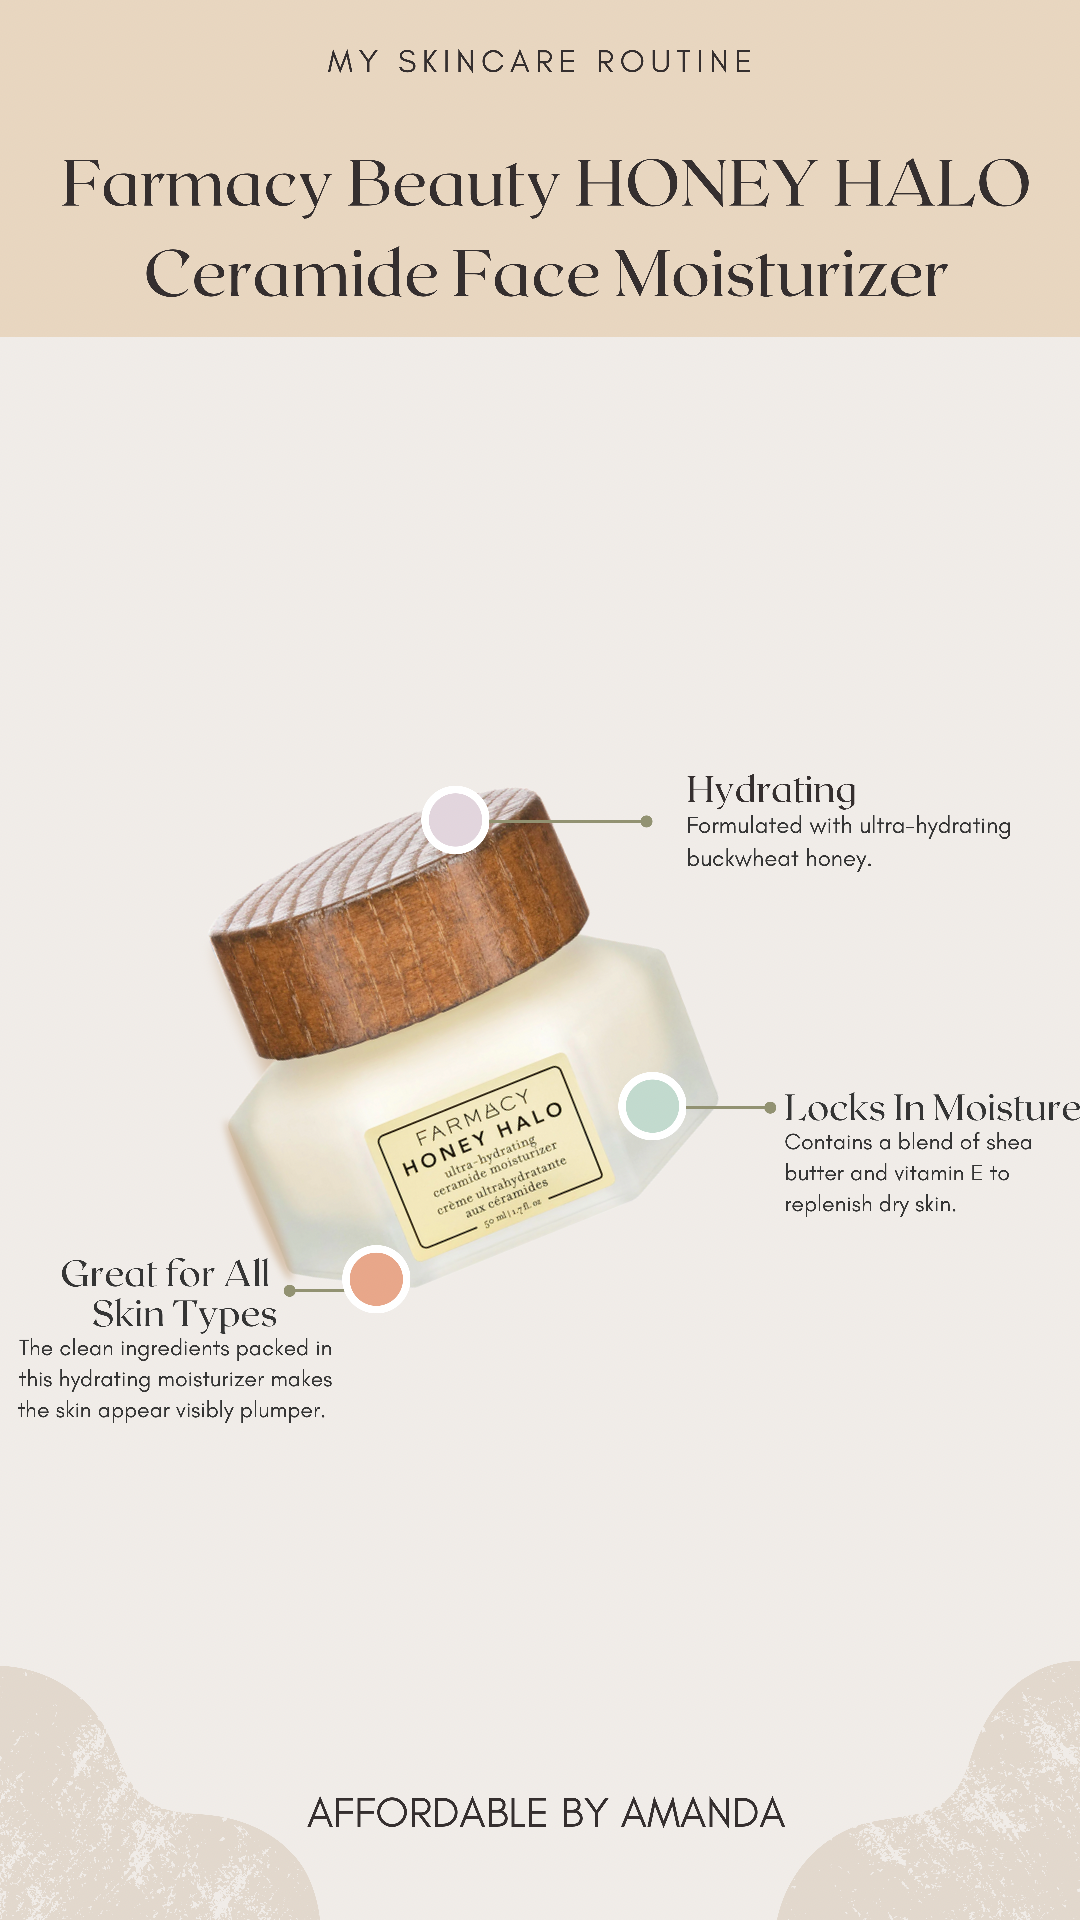 Farmacy Beauty Honey Halo Ceramide Face Moisturizer Review - My Farmacy Beauty Skin Care Routine | Affordable by Amanda